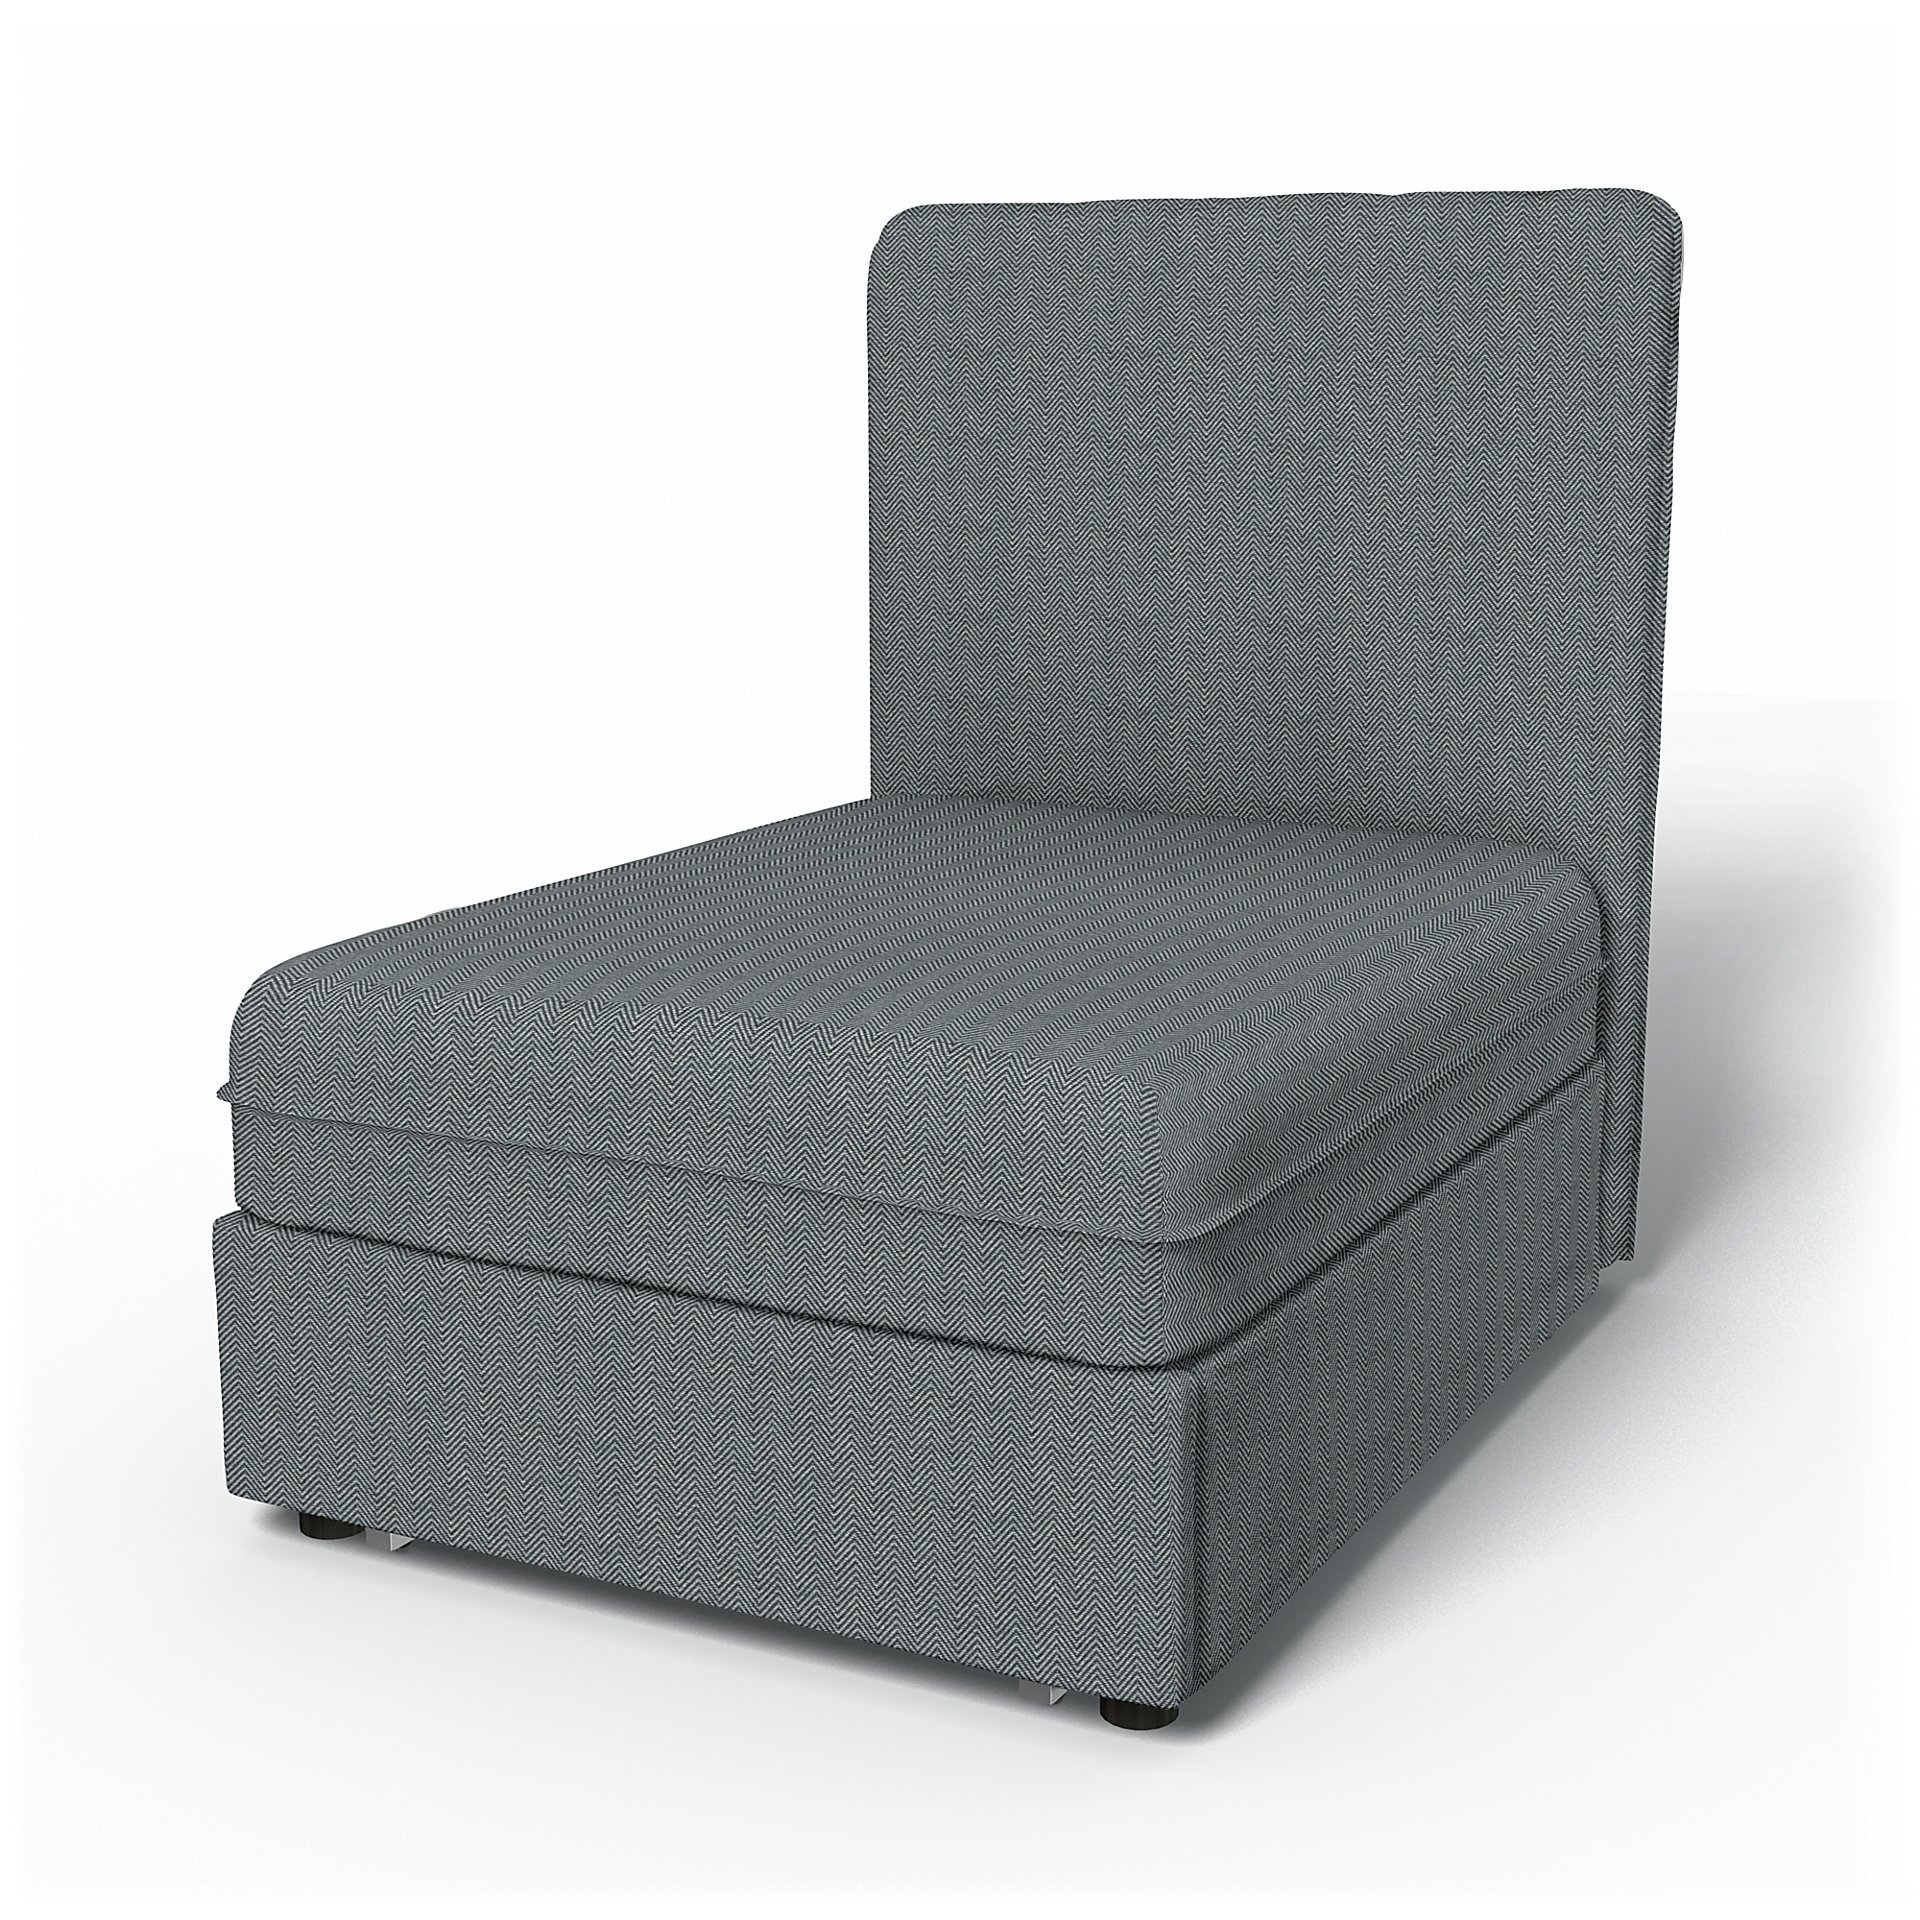 IKEA - Vallentuna Seat Module with High Back Sofa Bed Cover (80x100x46cm), Denim, Cotton - Bemz